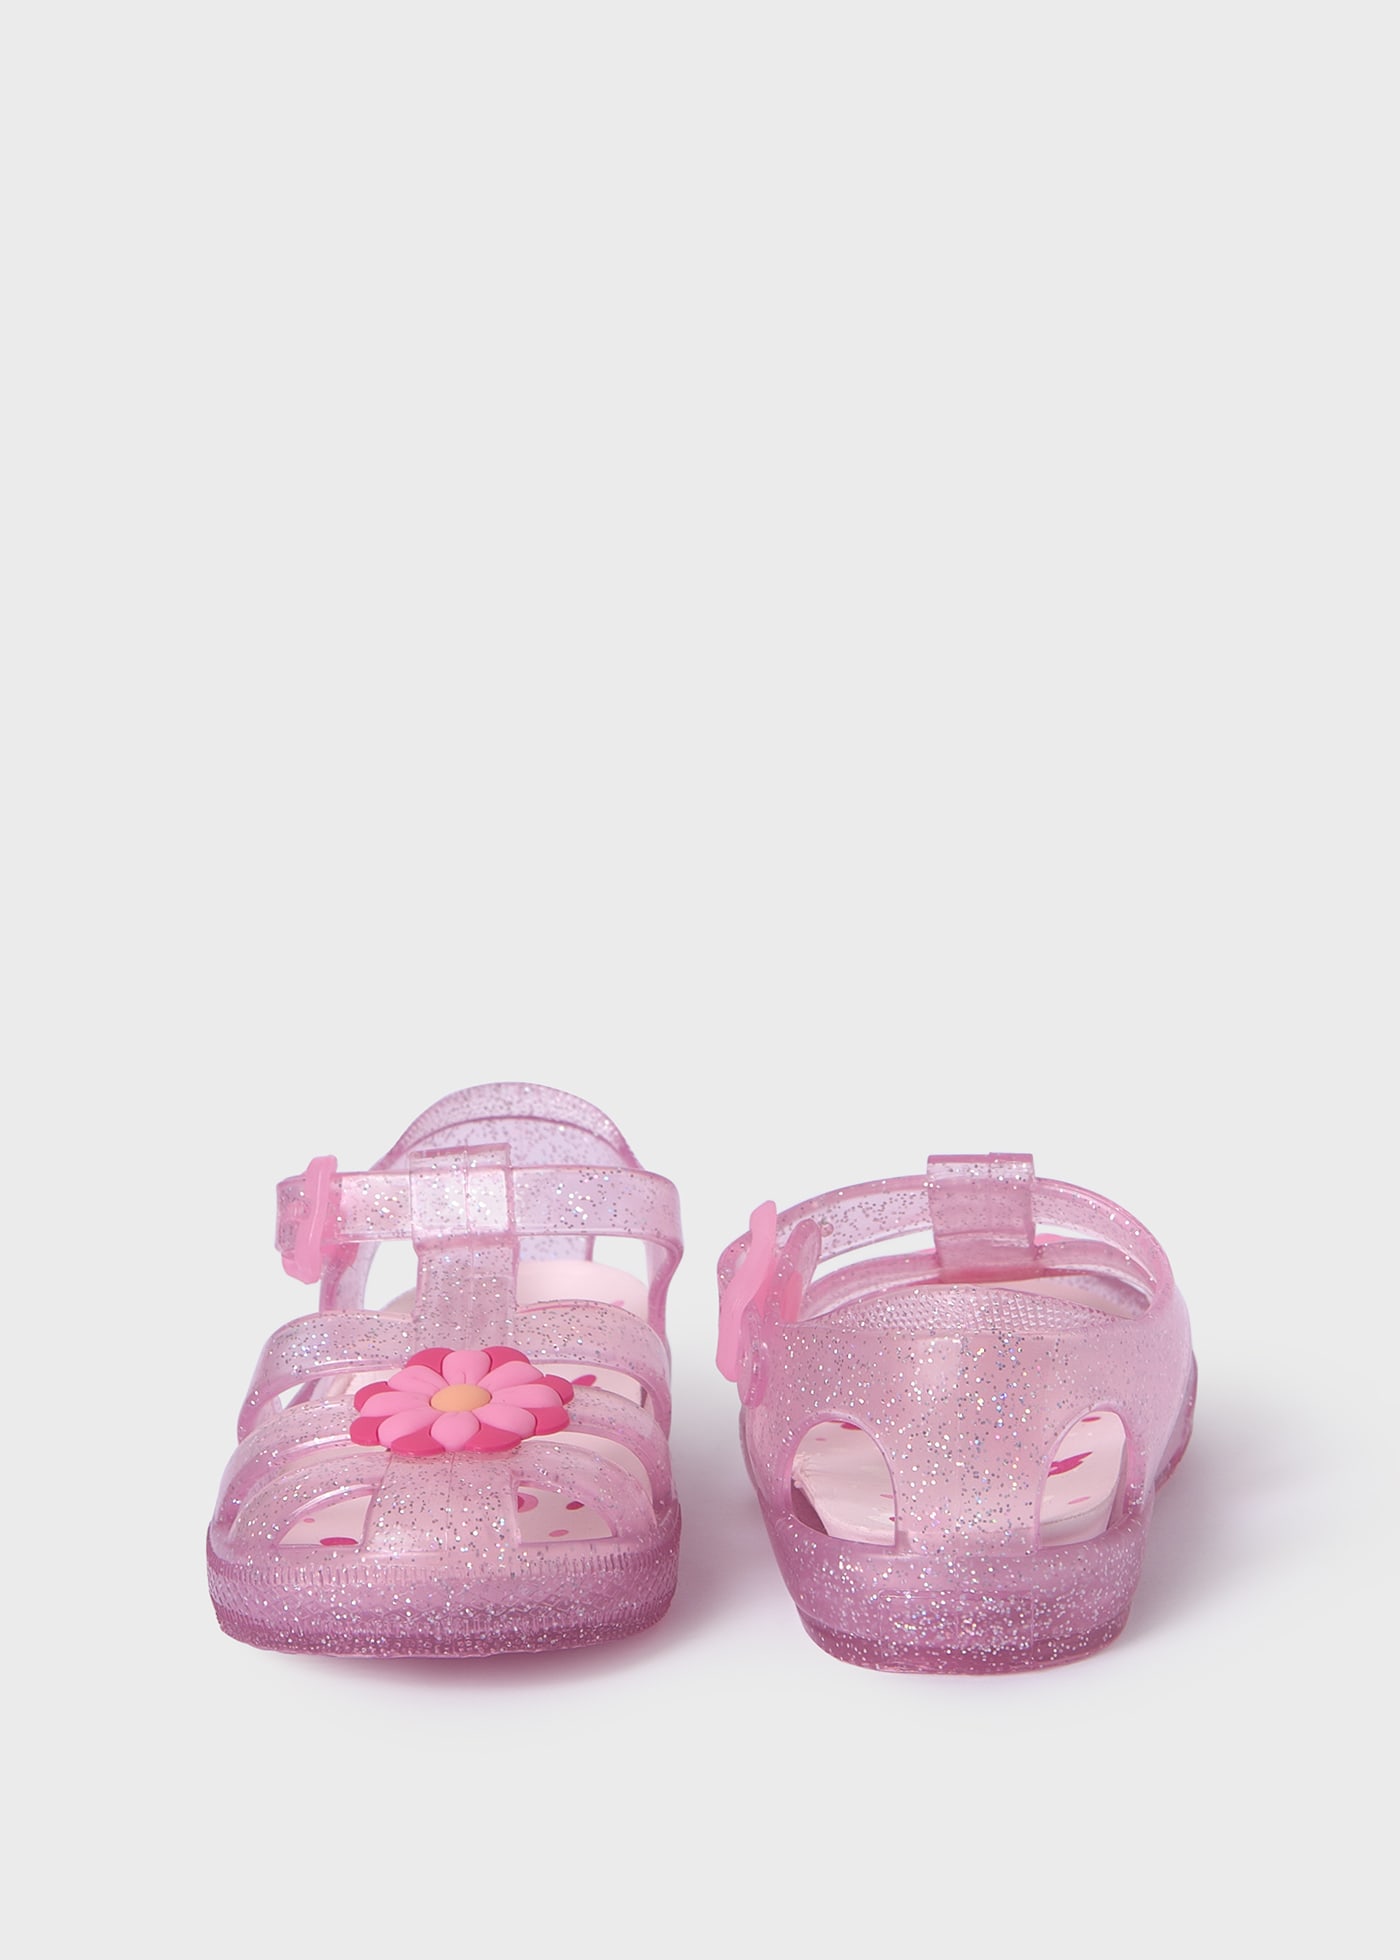 Bade-Sandalen mit Zehenschutz